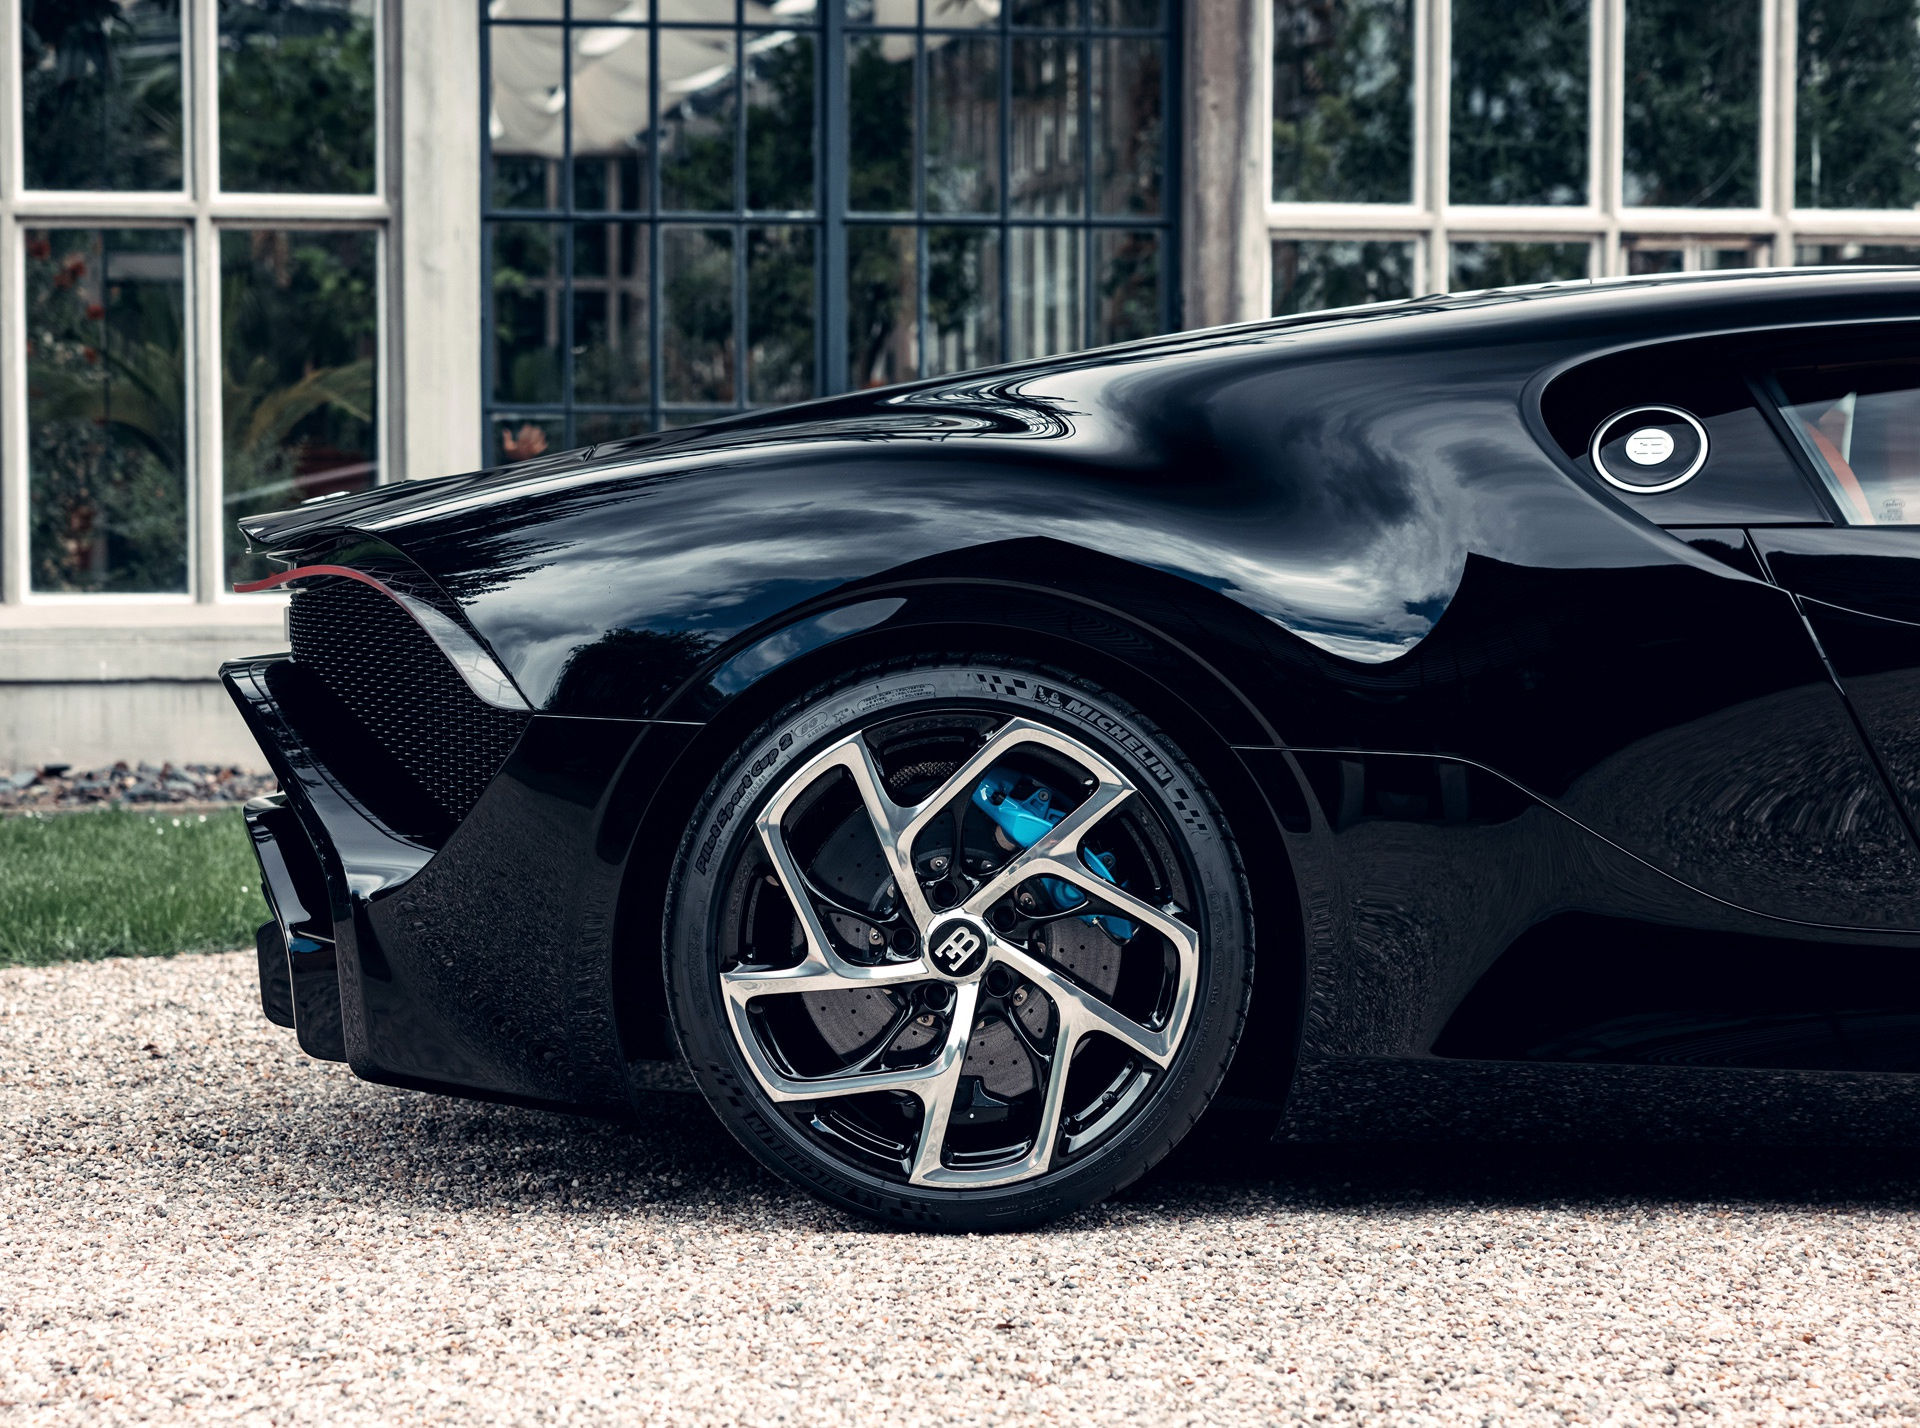 Bugatti La Voiture Noire duoc giao cho khach hang anh 6